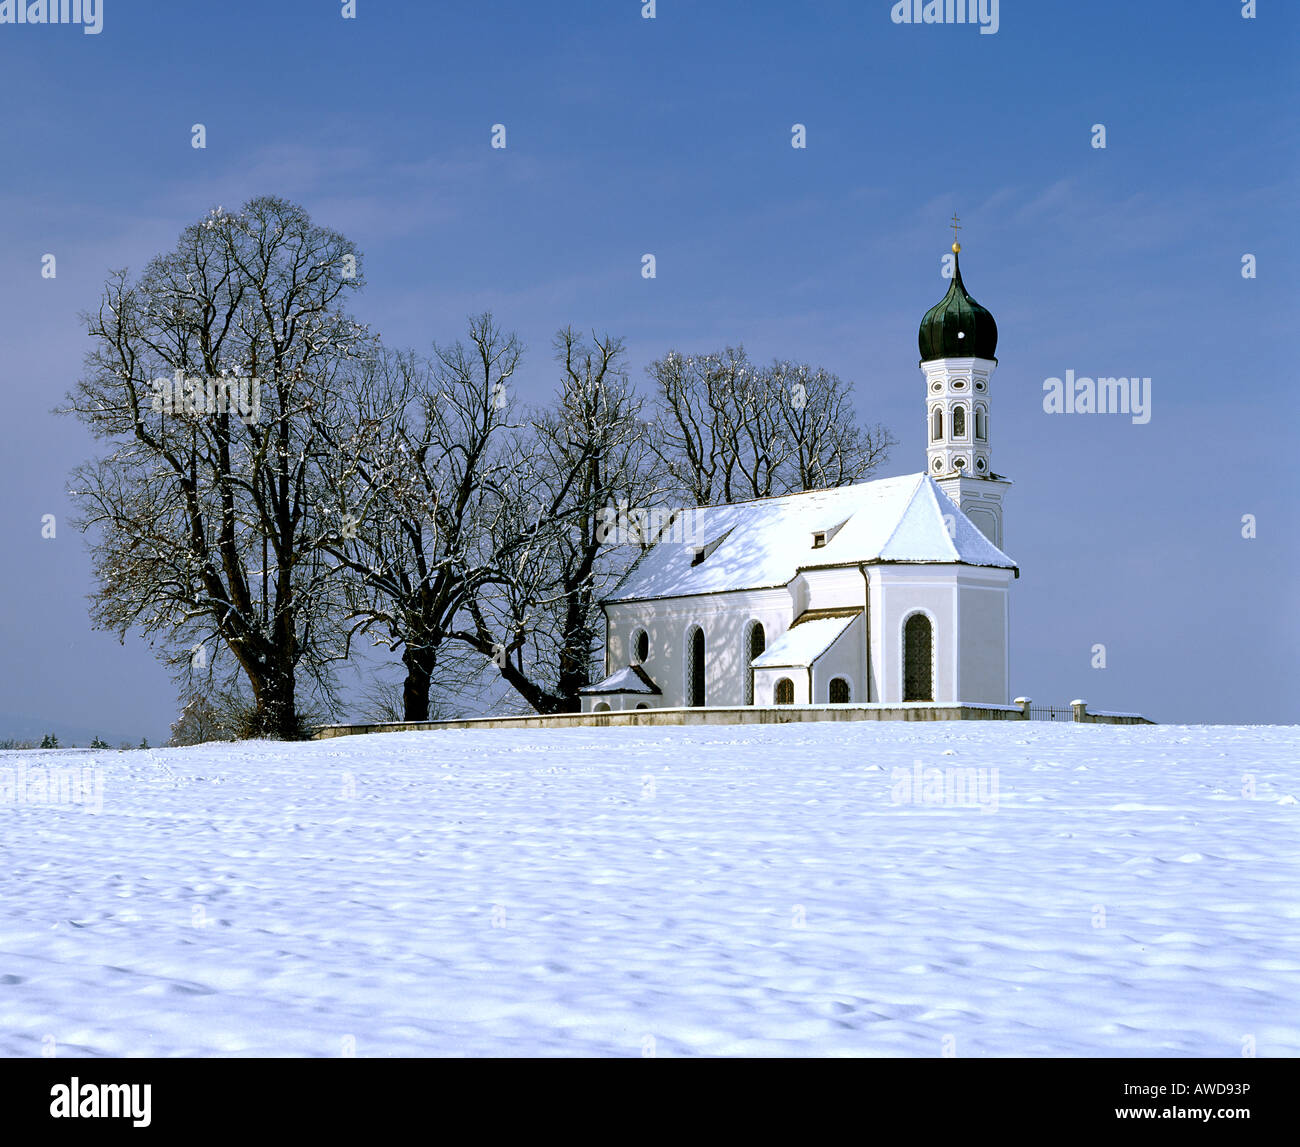 Andreas church near Etting in winter, Weilheim district, Upper Bavaria, Germany Stock Photo